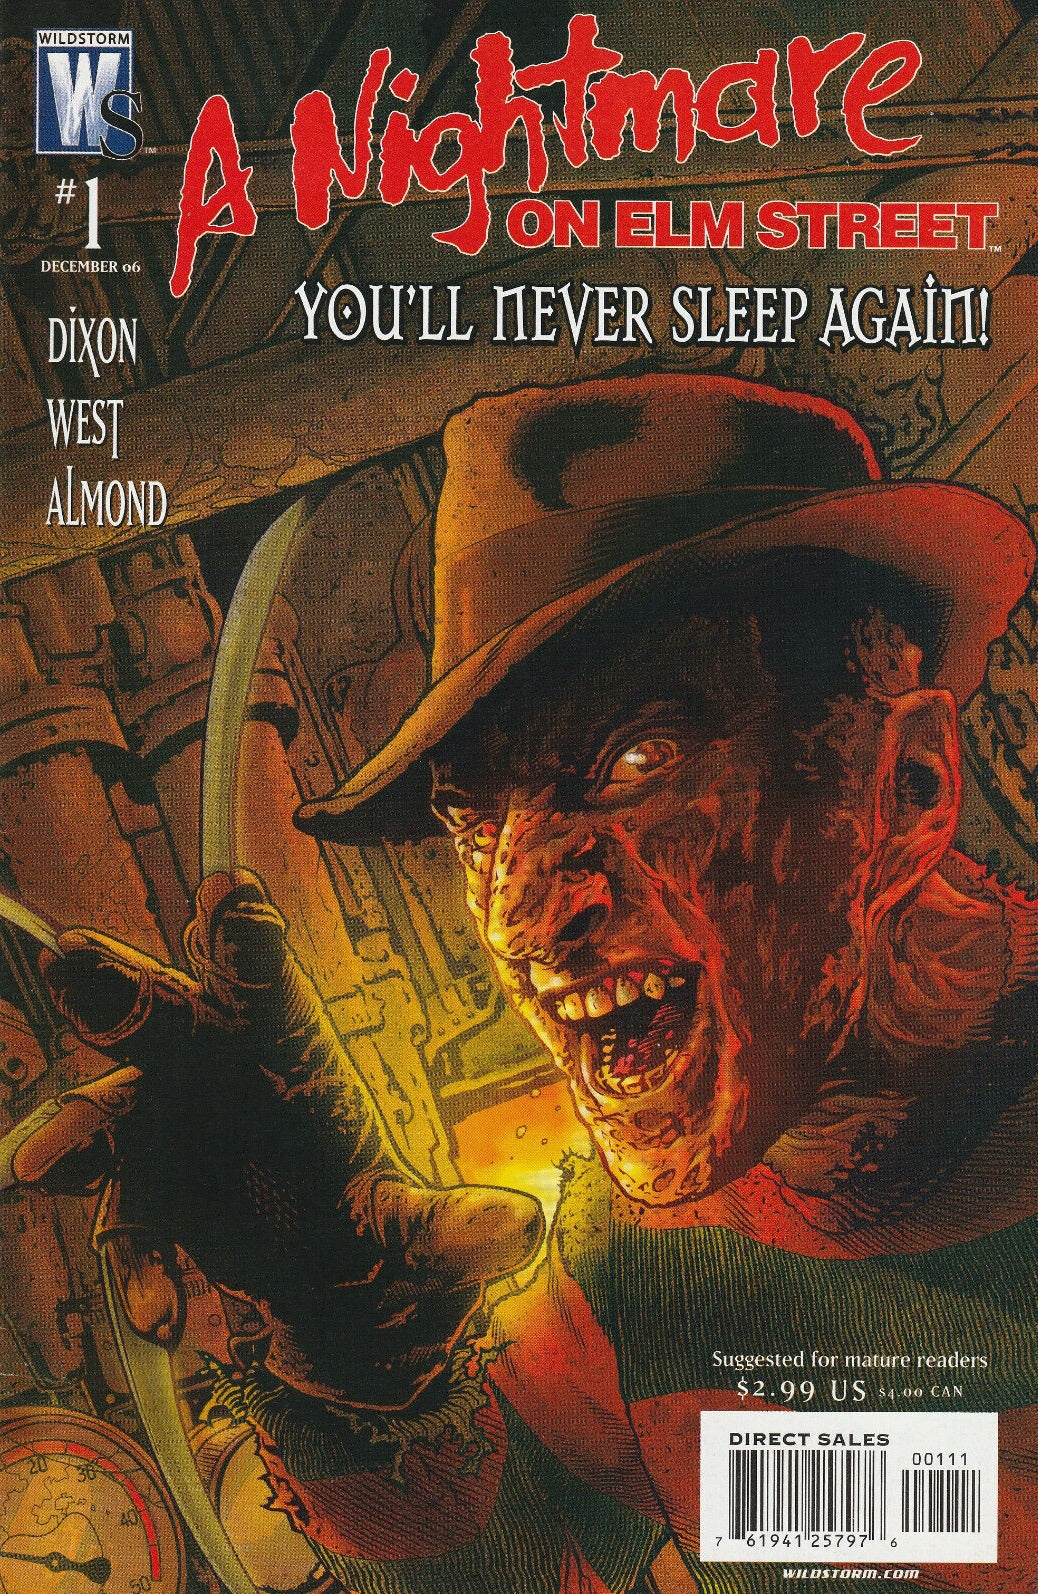 A NIGHTMARE ON ELM STREET # 1 YOU'LL NEVER SLEEP AGAIN WILDSTORM COMIC BOOK 2006